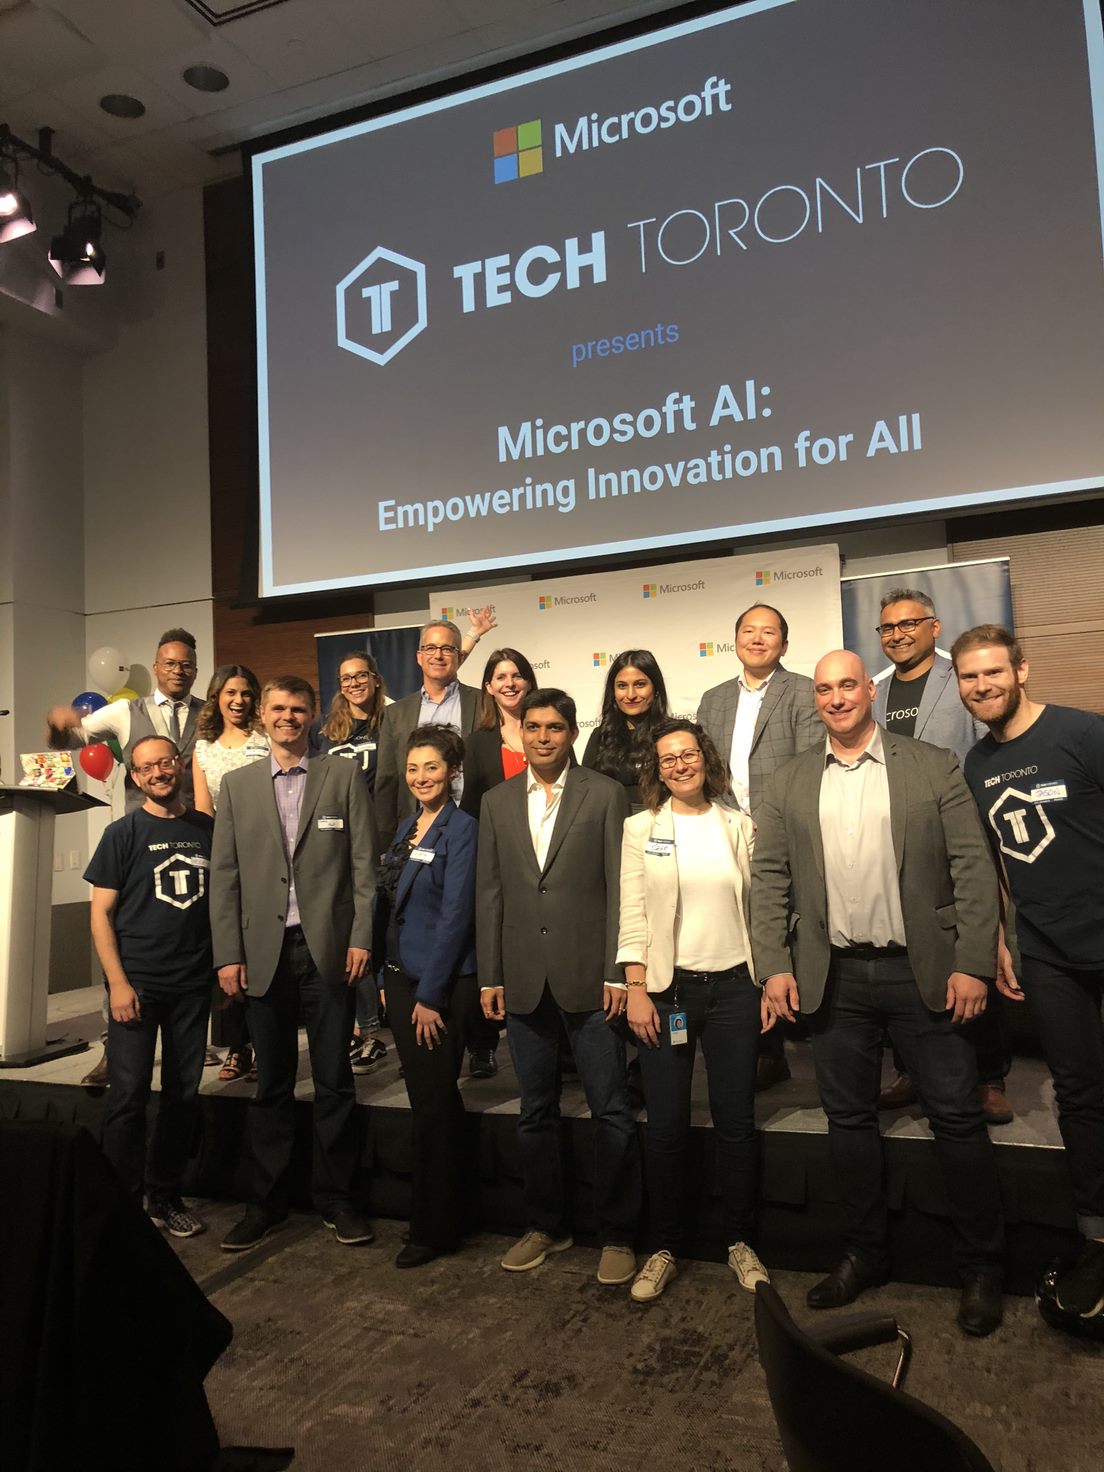 A photograph of the Microsoft AI event team